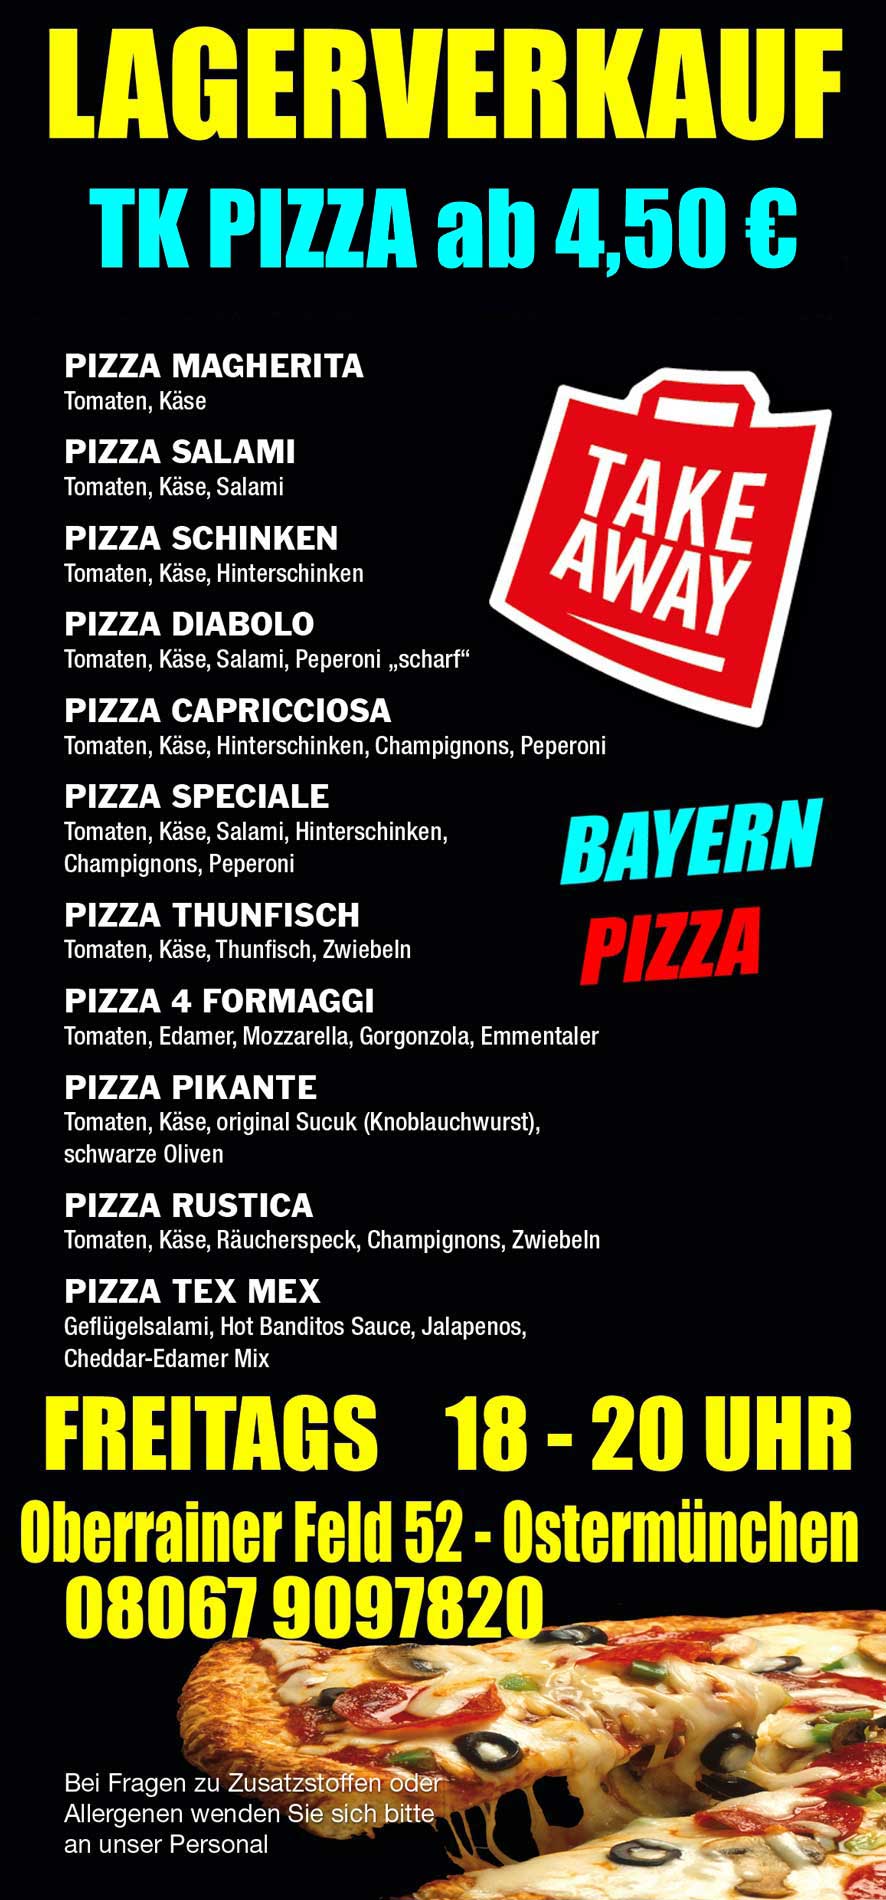 Lagerverkauf Bayernpizza